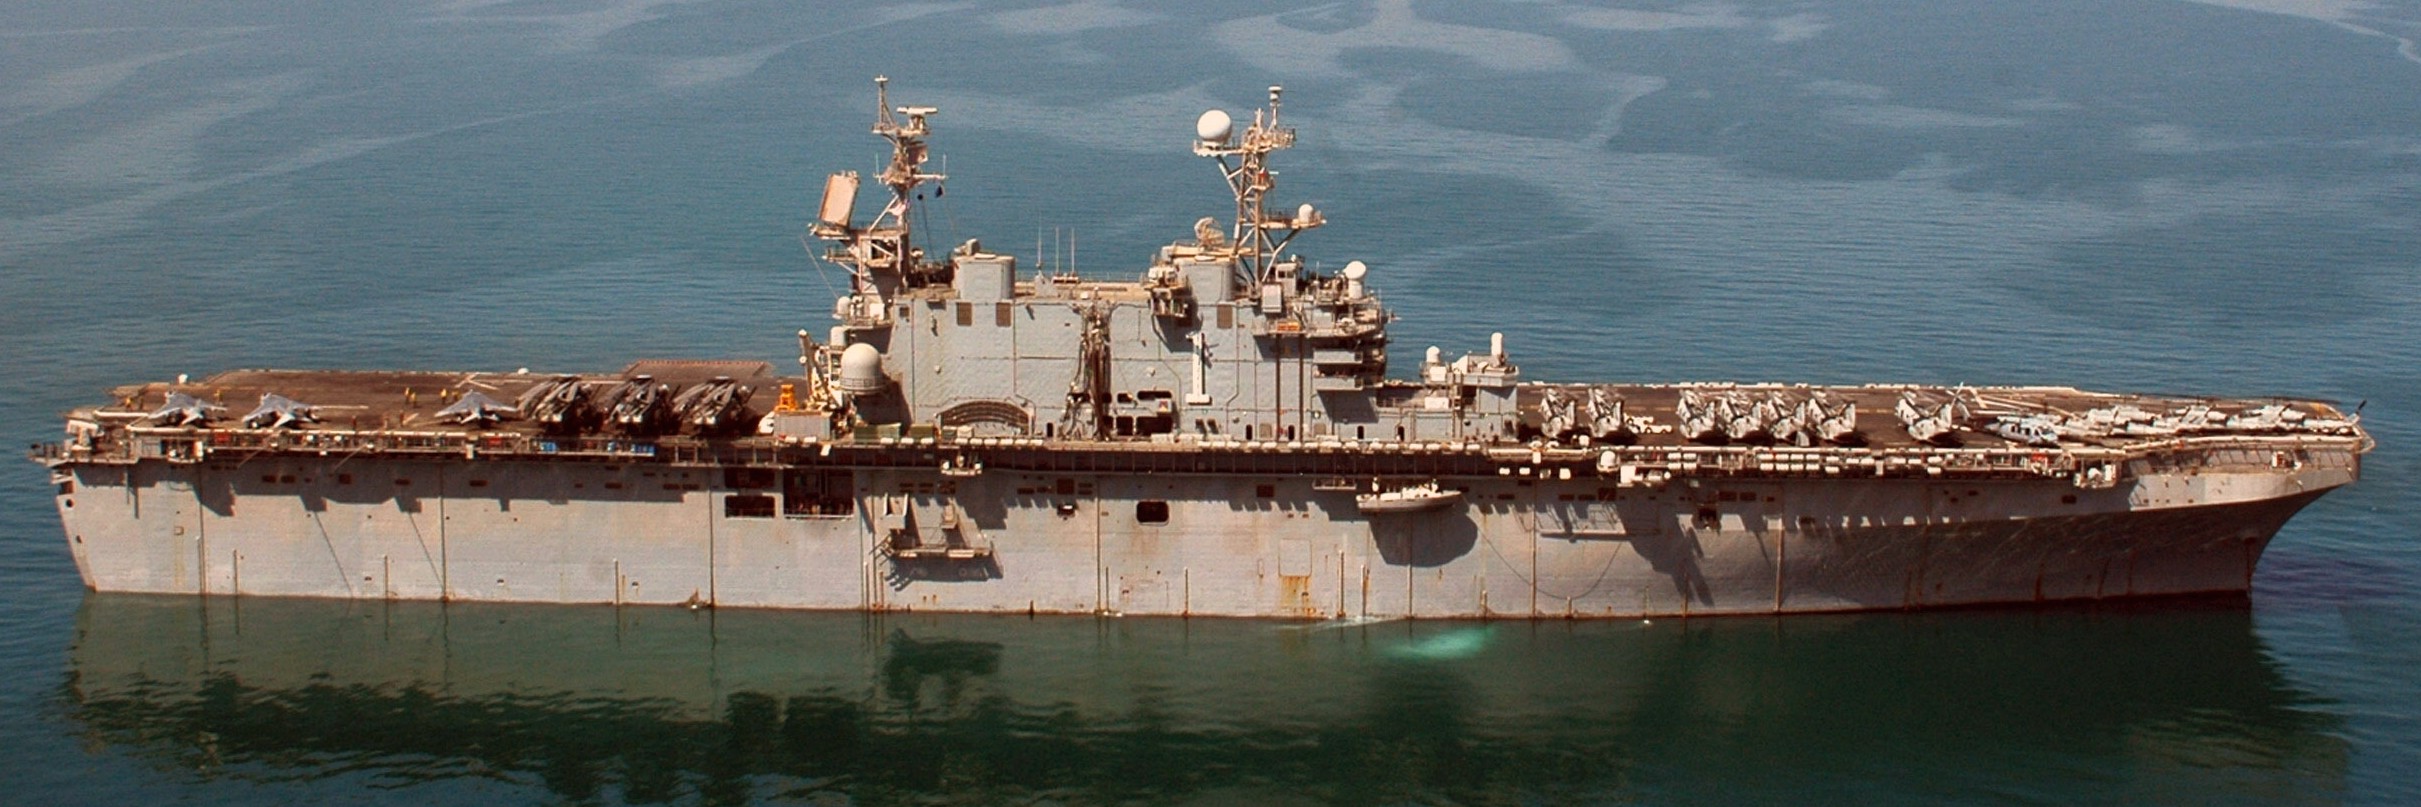 lha-1 uss tarawa amphibious assault ship us navy 11th meu soc marines hmm-166 persian gulf 49